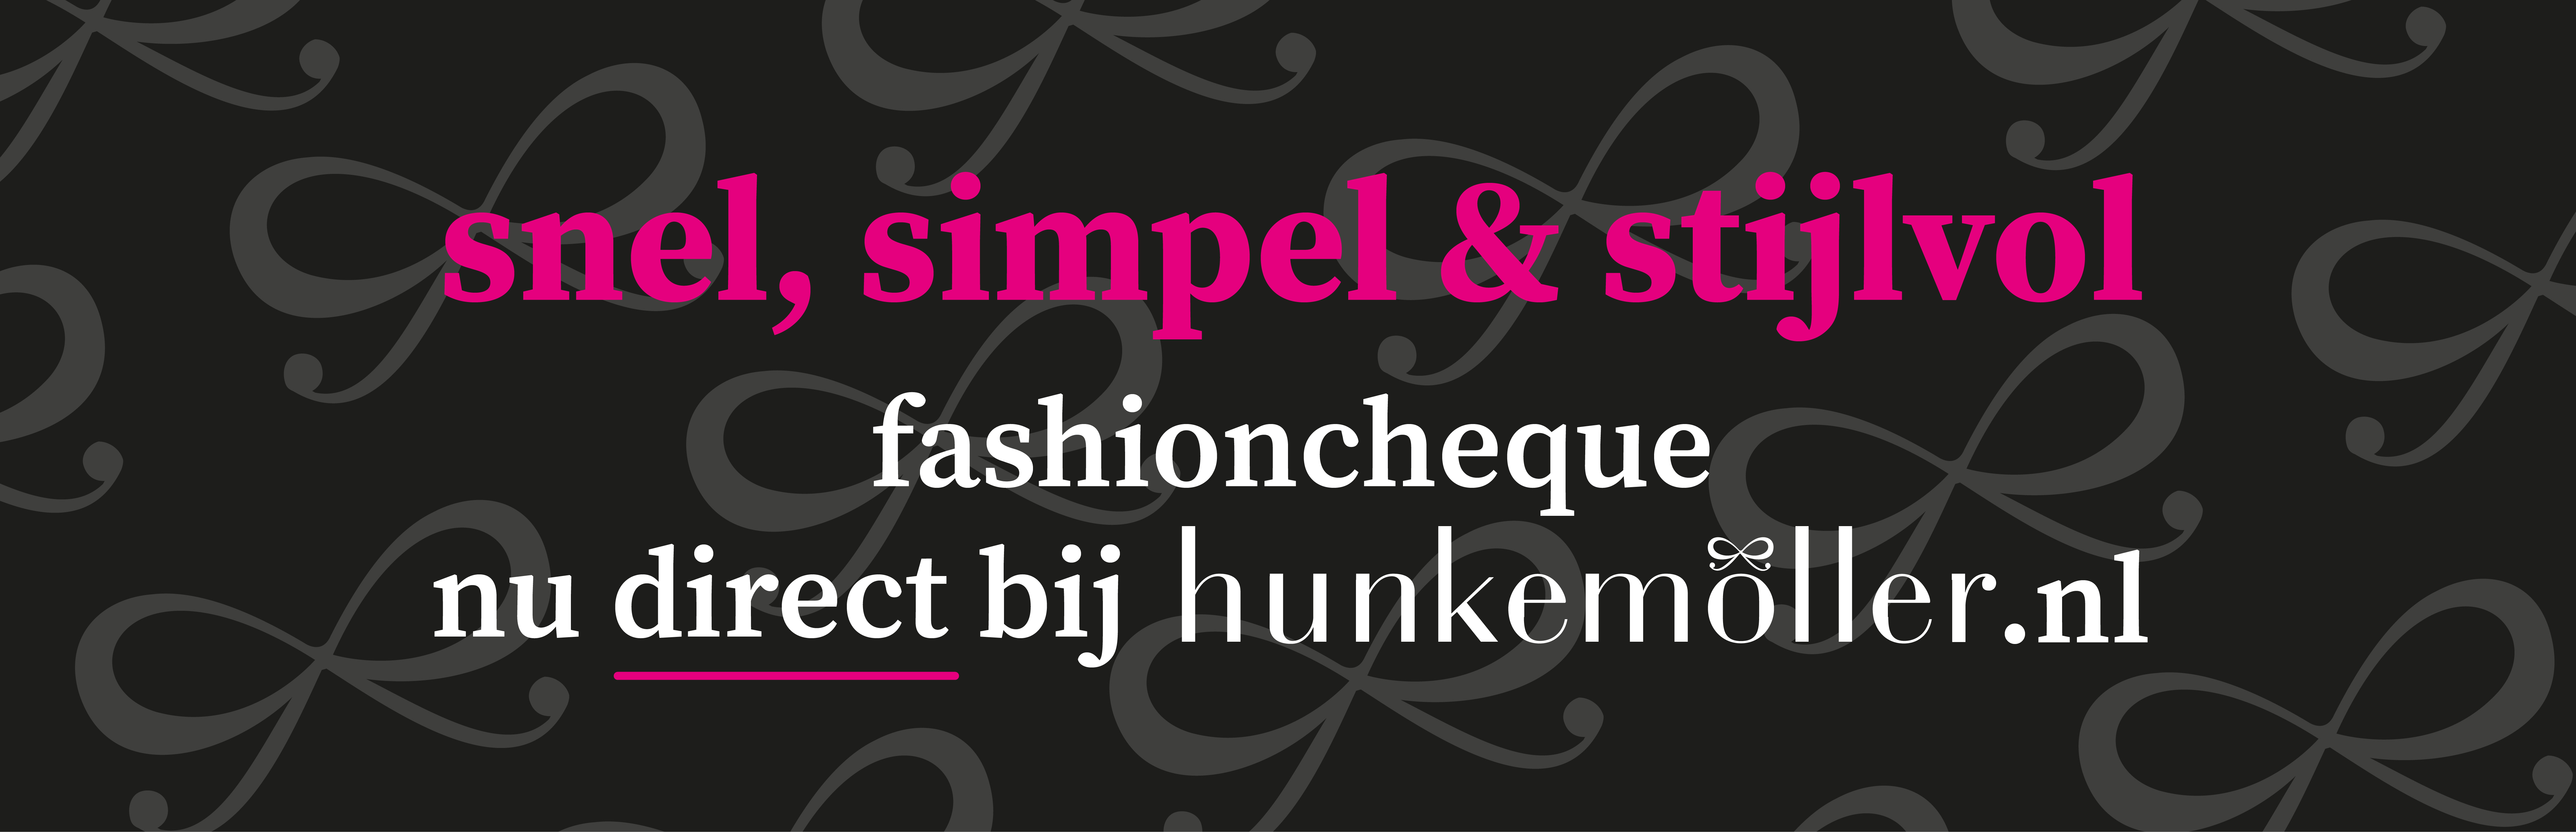 fashioncheque nu direct te verzilveren bij Hunkemöller.nl 